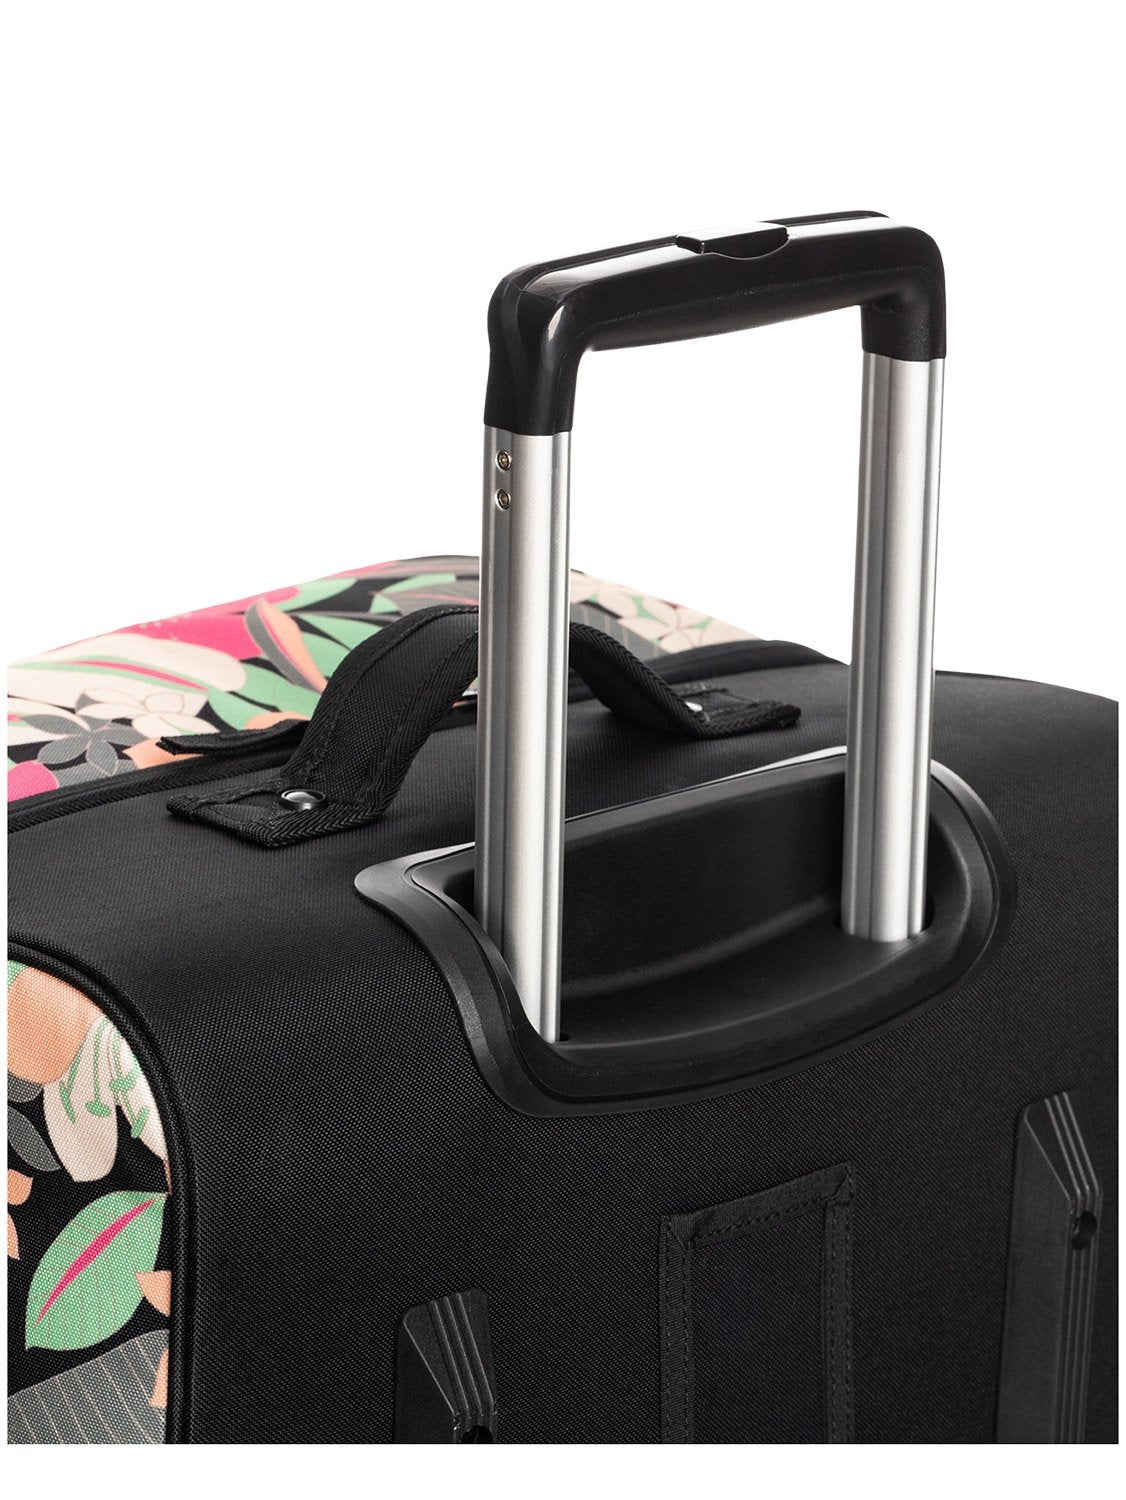 Roxy Ladies Travel Dreaming 62L Suitcase